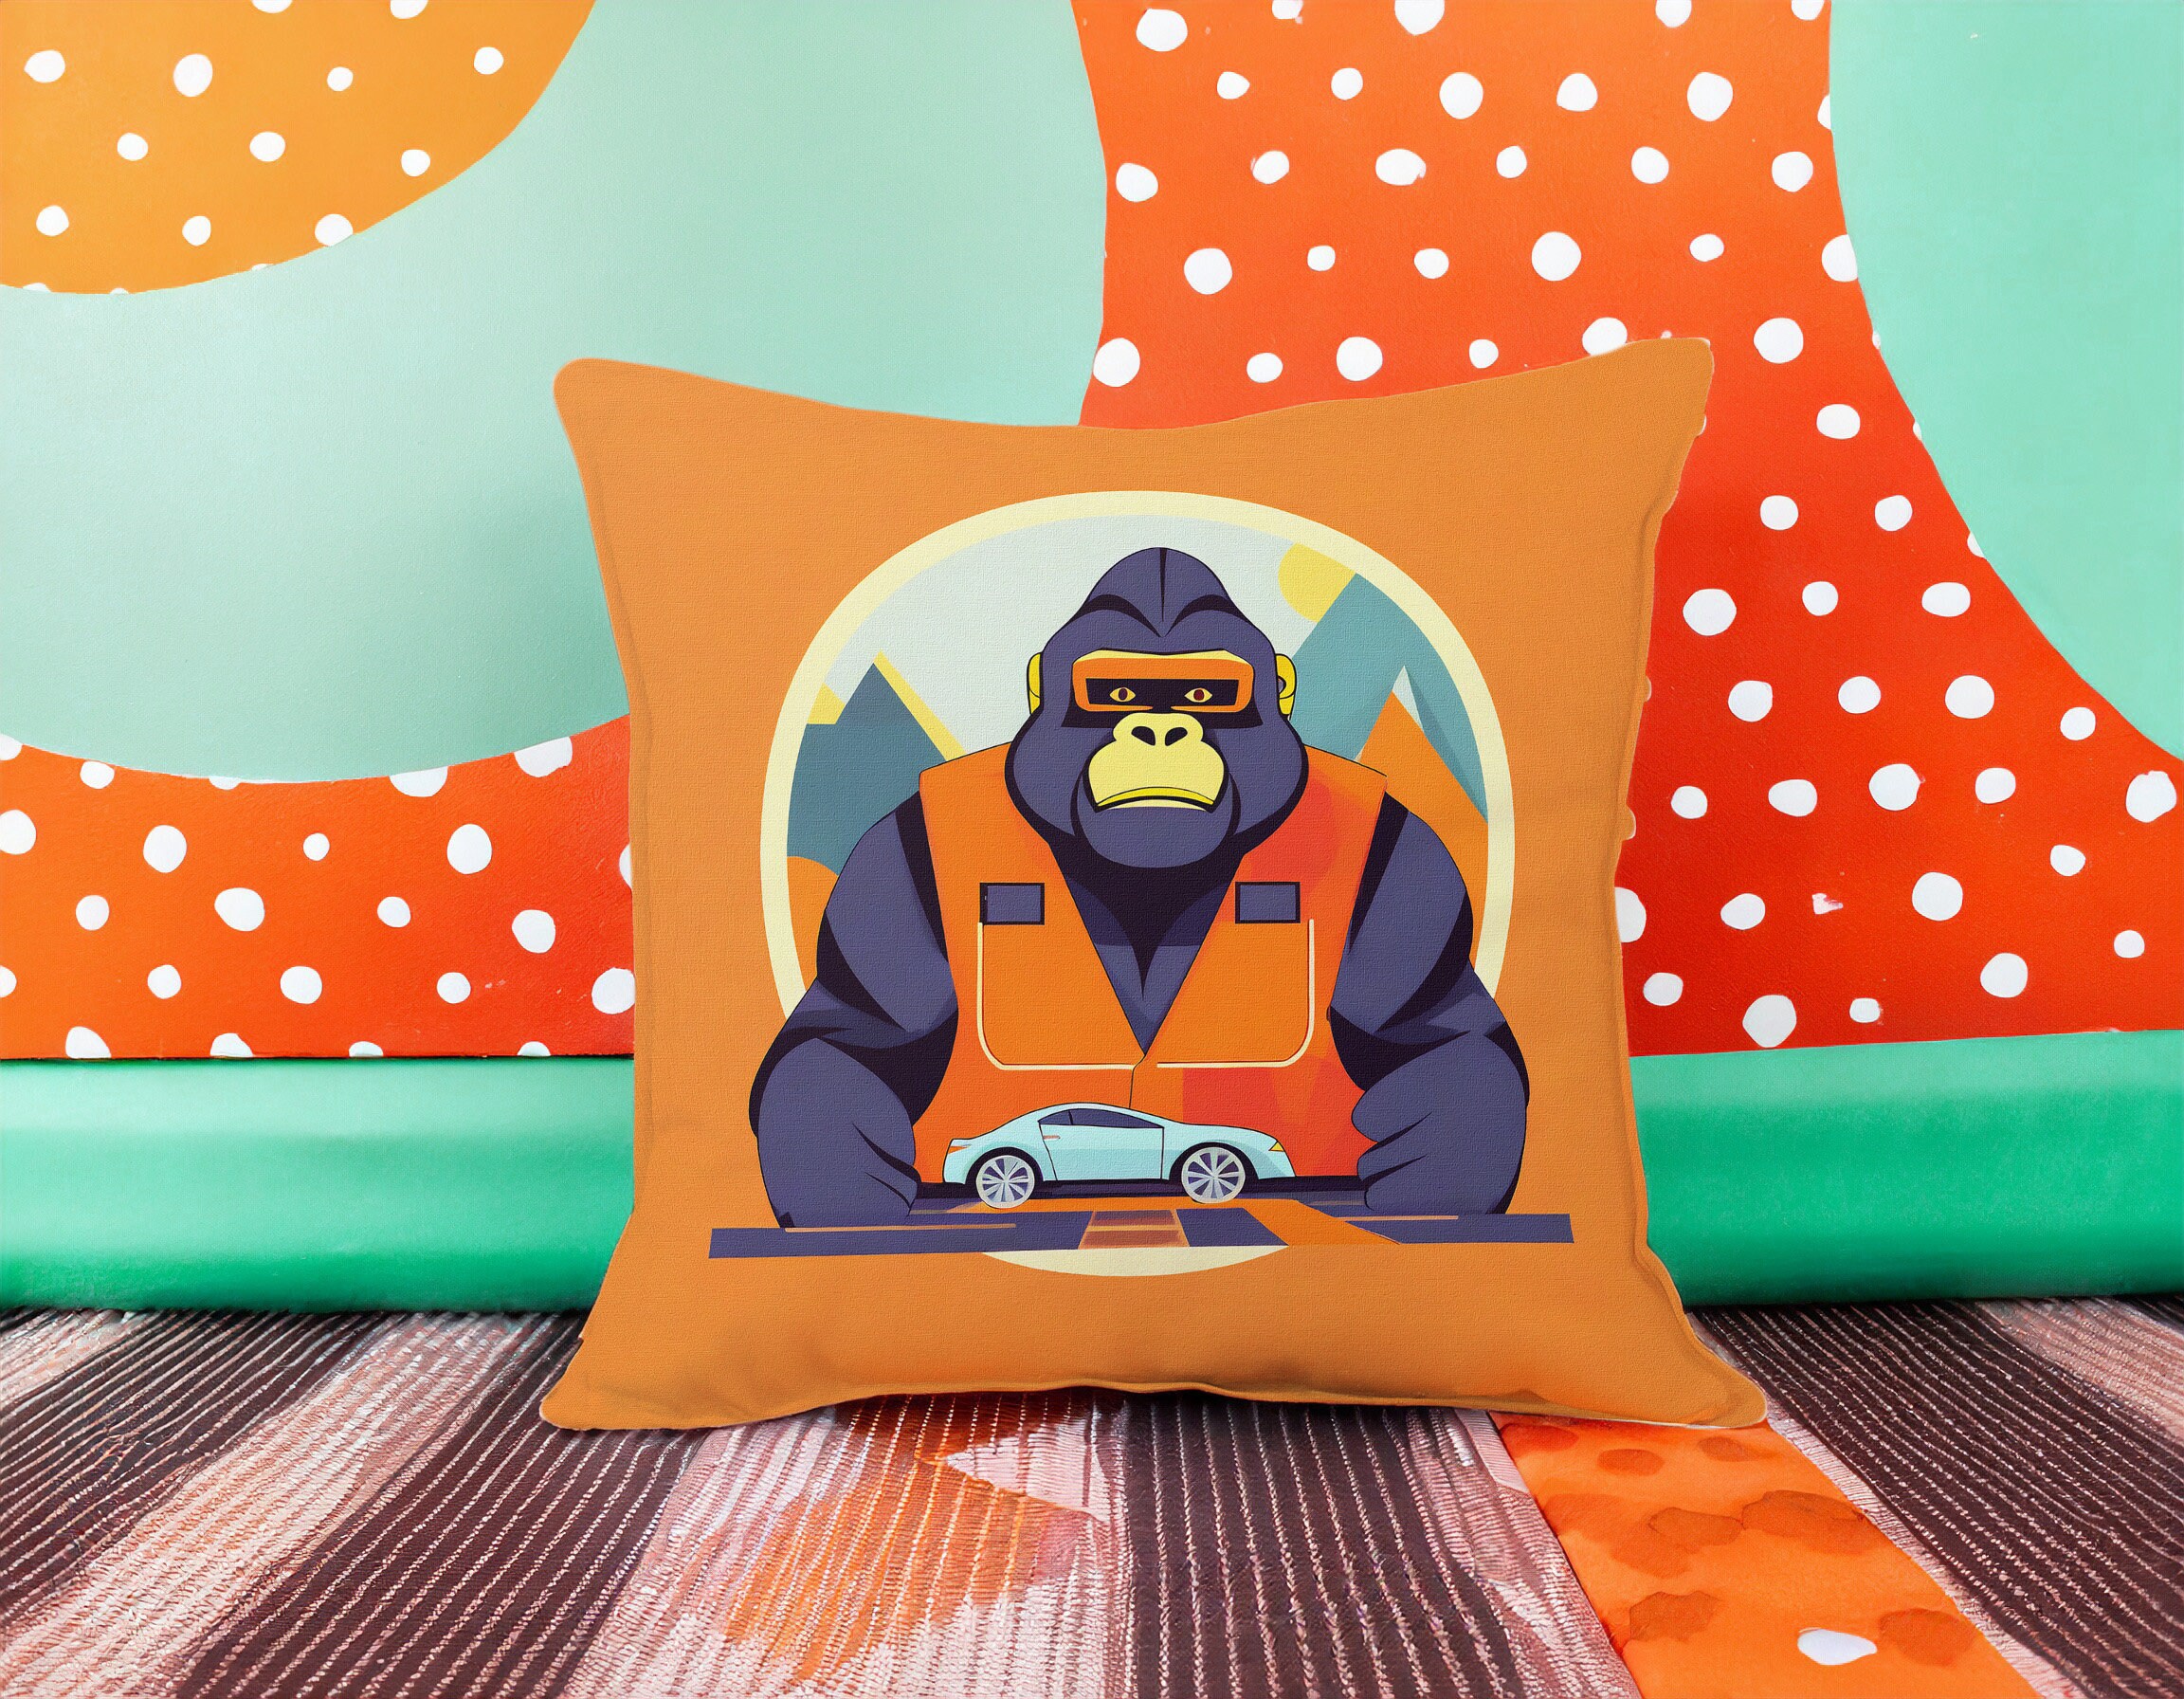 Charcoal Gorilla Cushion by Bex Williams Ape Pillow Gorilla Vegan-suede  Cushion Cover Gorilla Guy Hand-made Cushion Gorilla Decor 